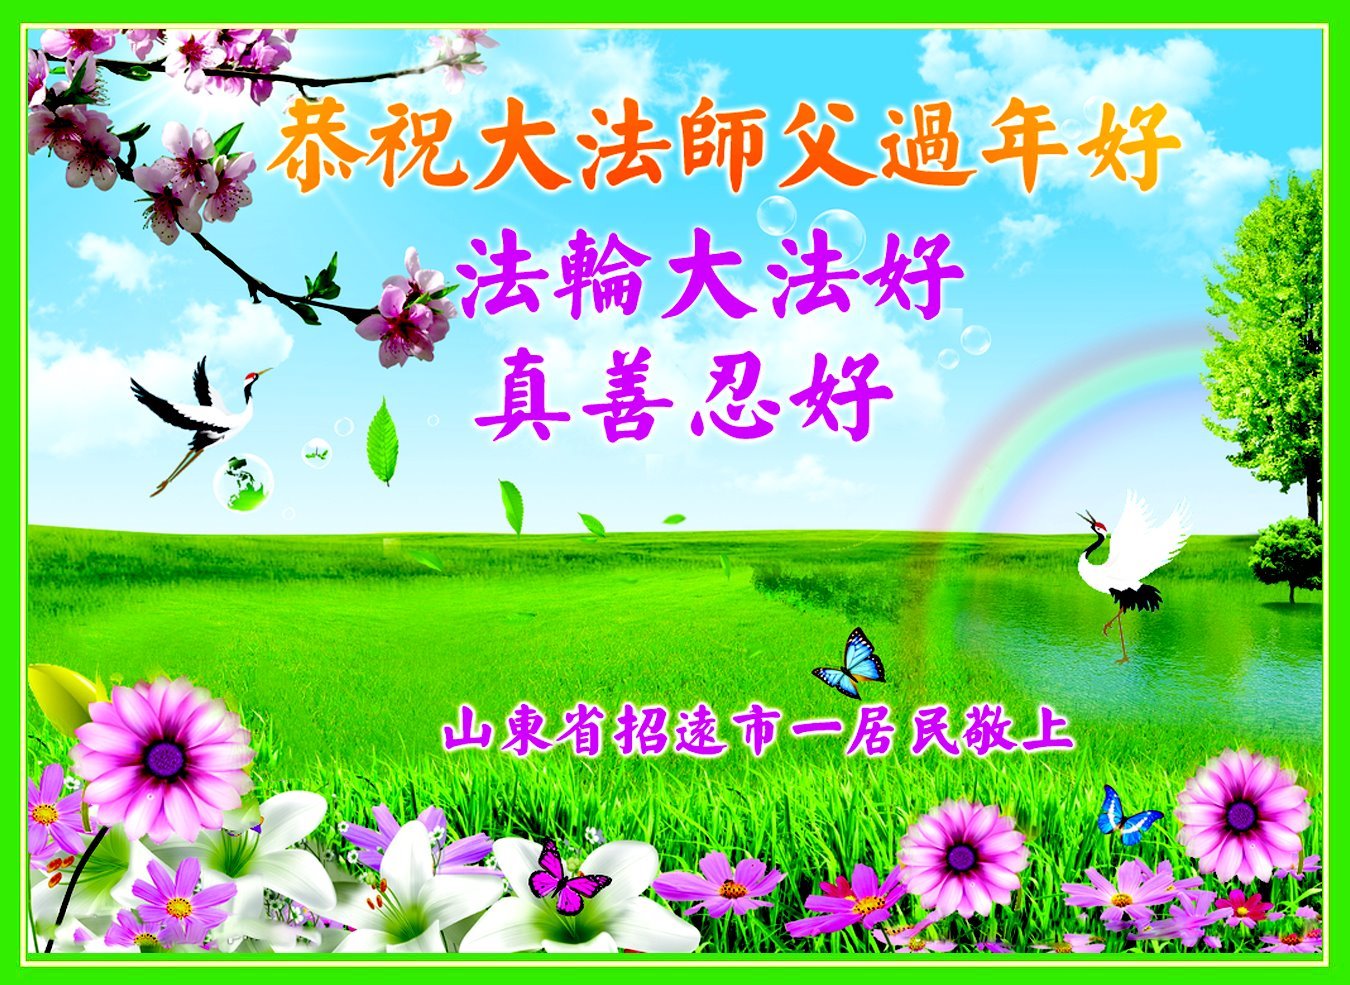 Image for article حامیان فالون دافا سال نو چینی را به استاد لی هنگجی تبریک می‌گویند